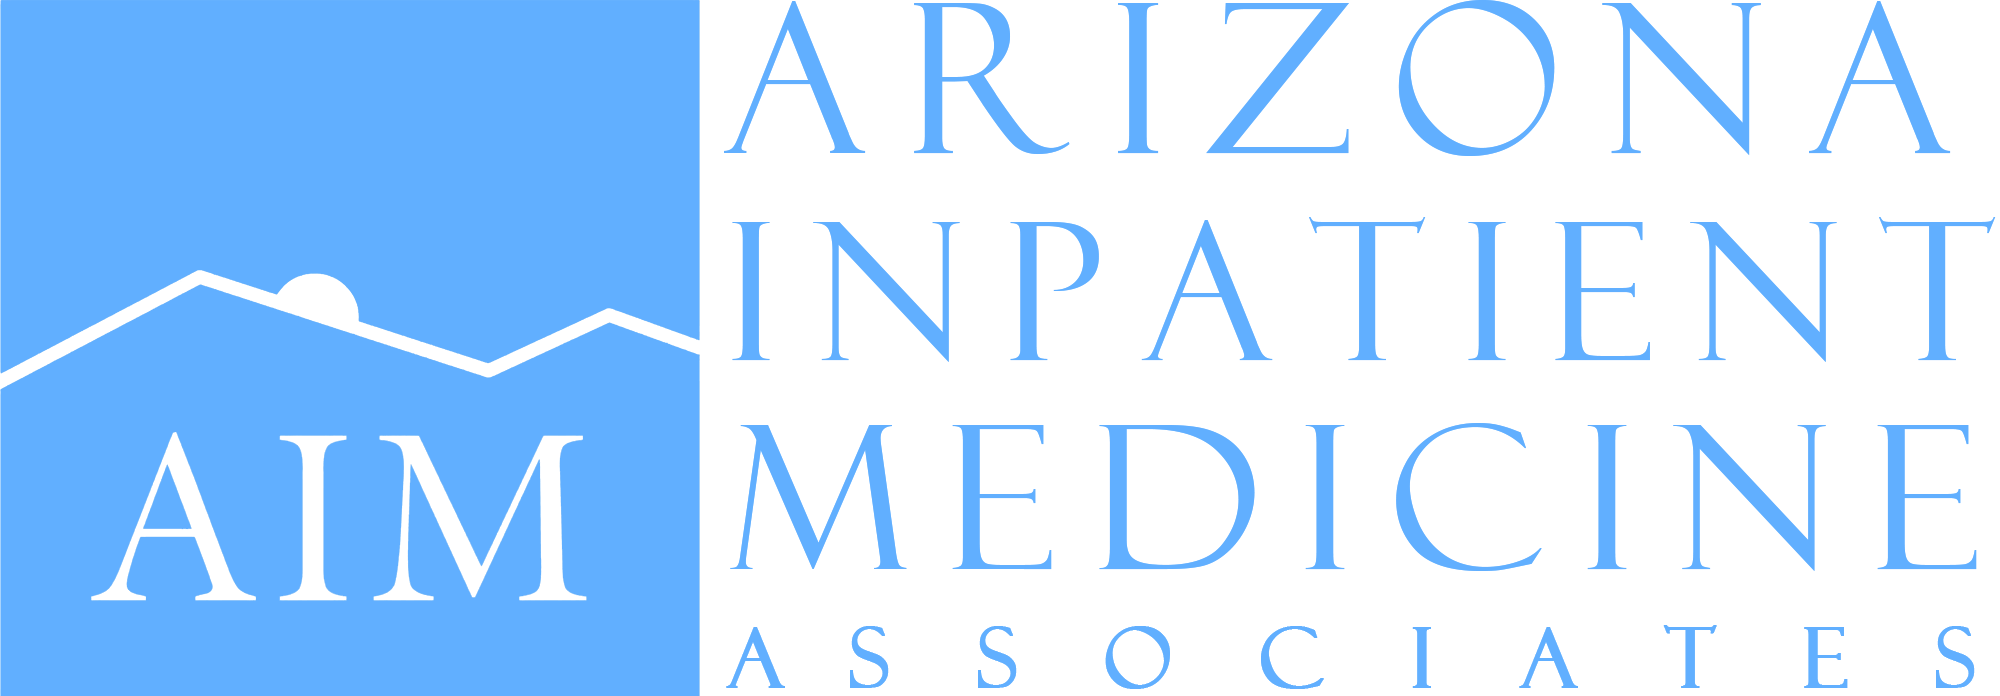 Arizona Inpatient Medicine